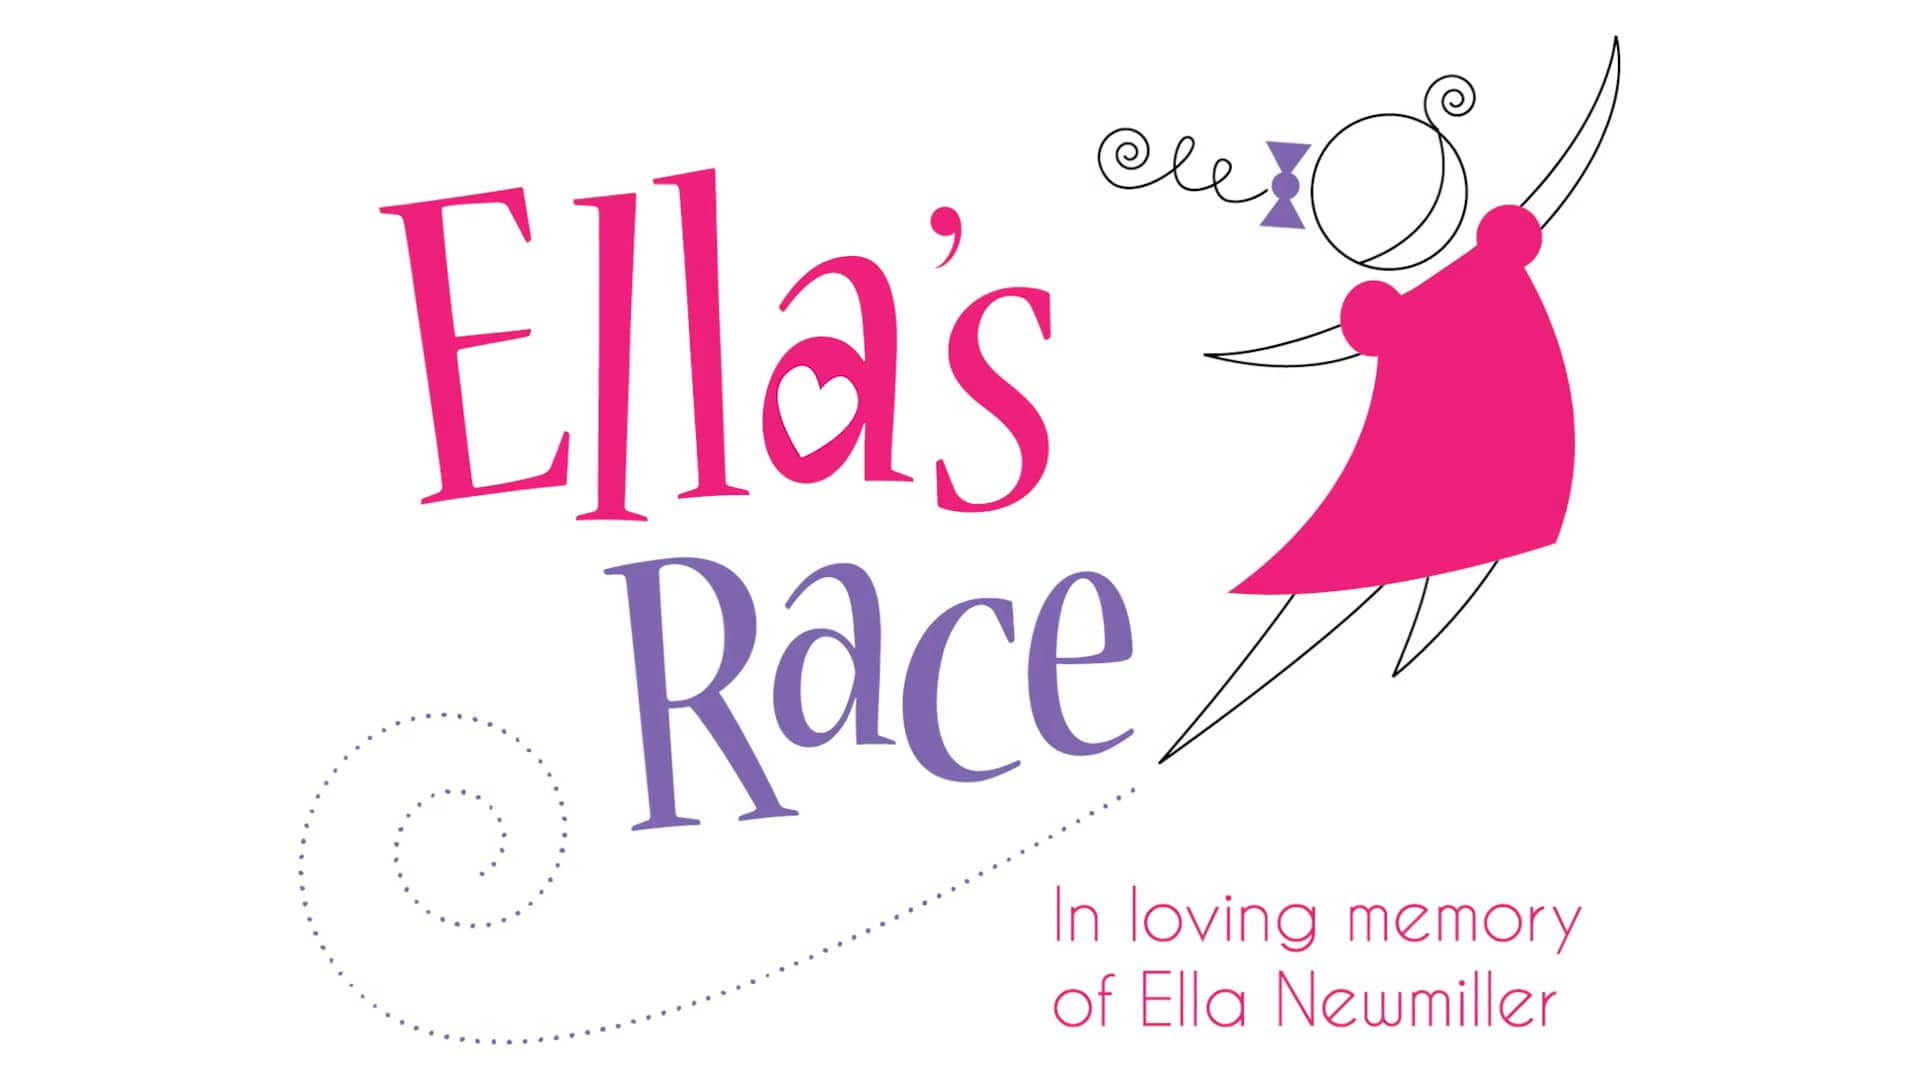 Ella’s Race logo on RaceRaves